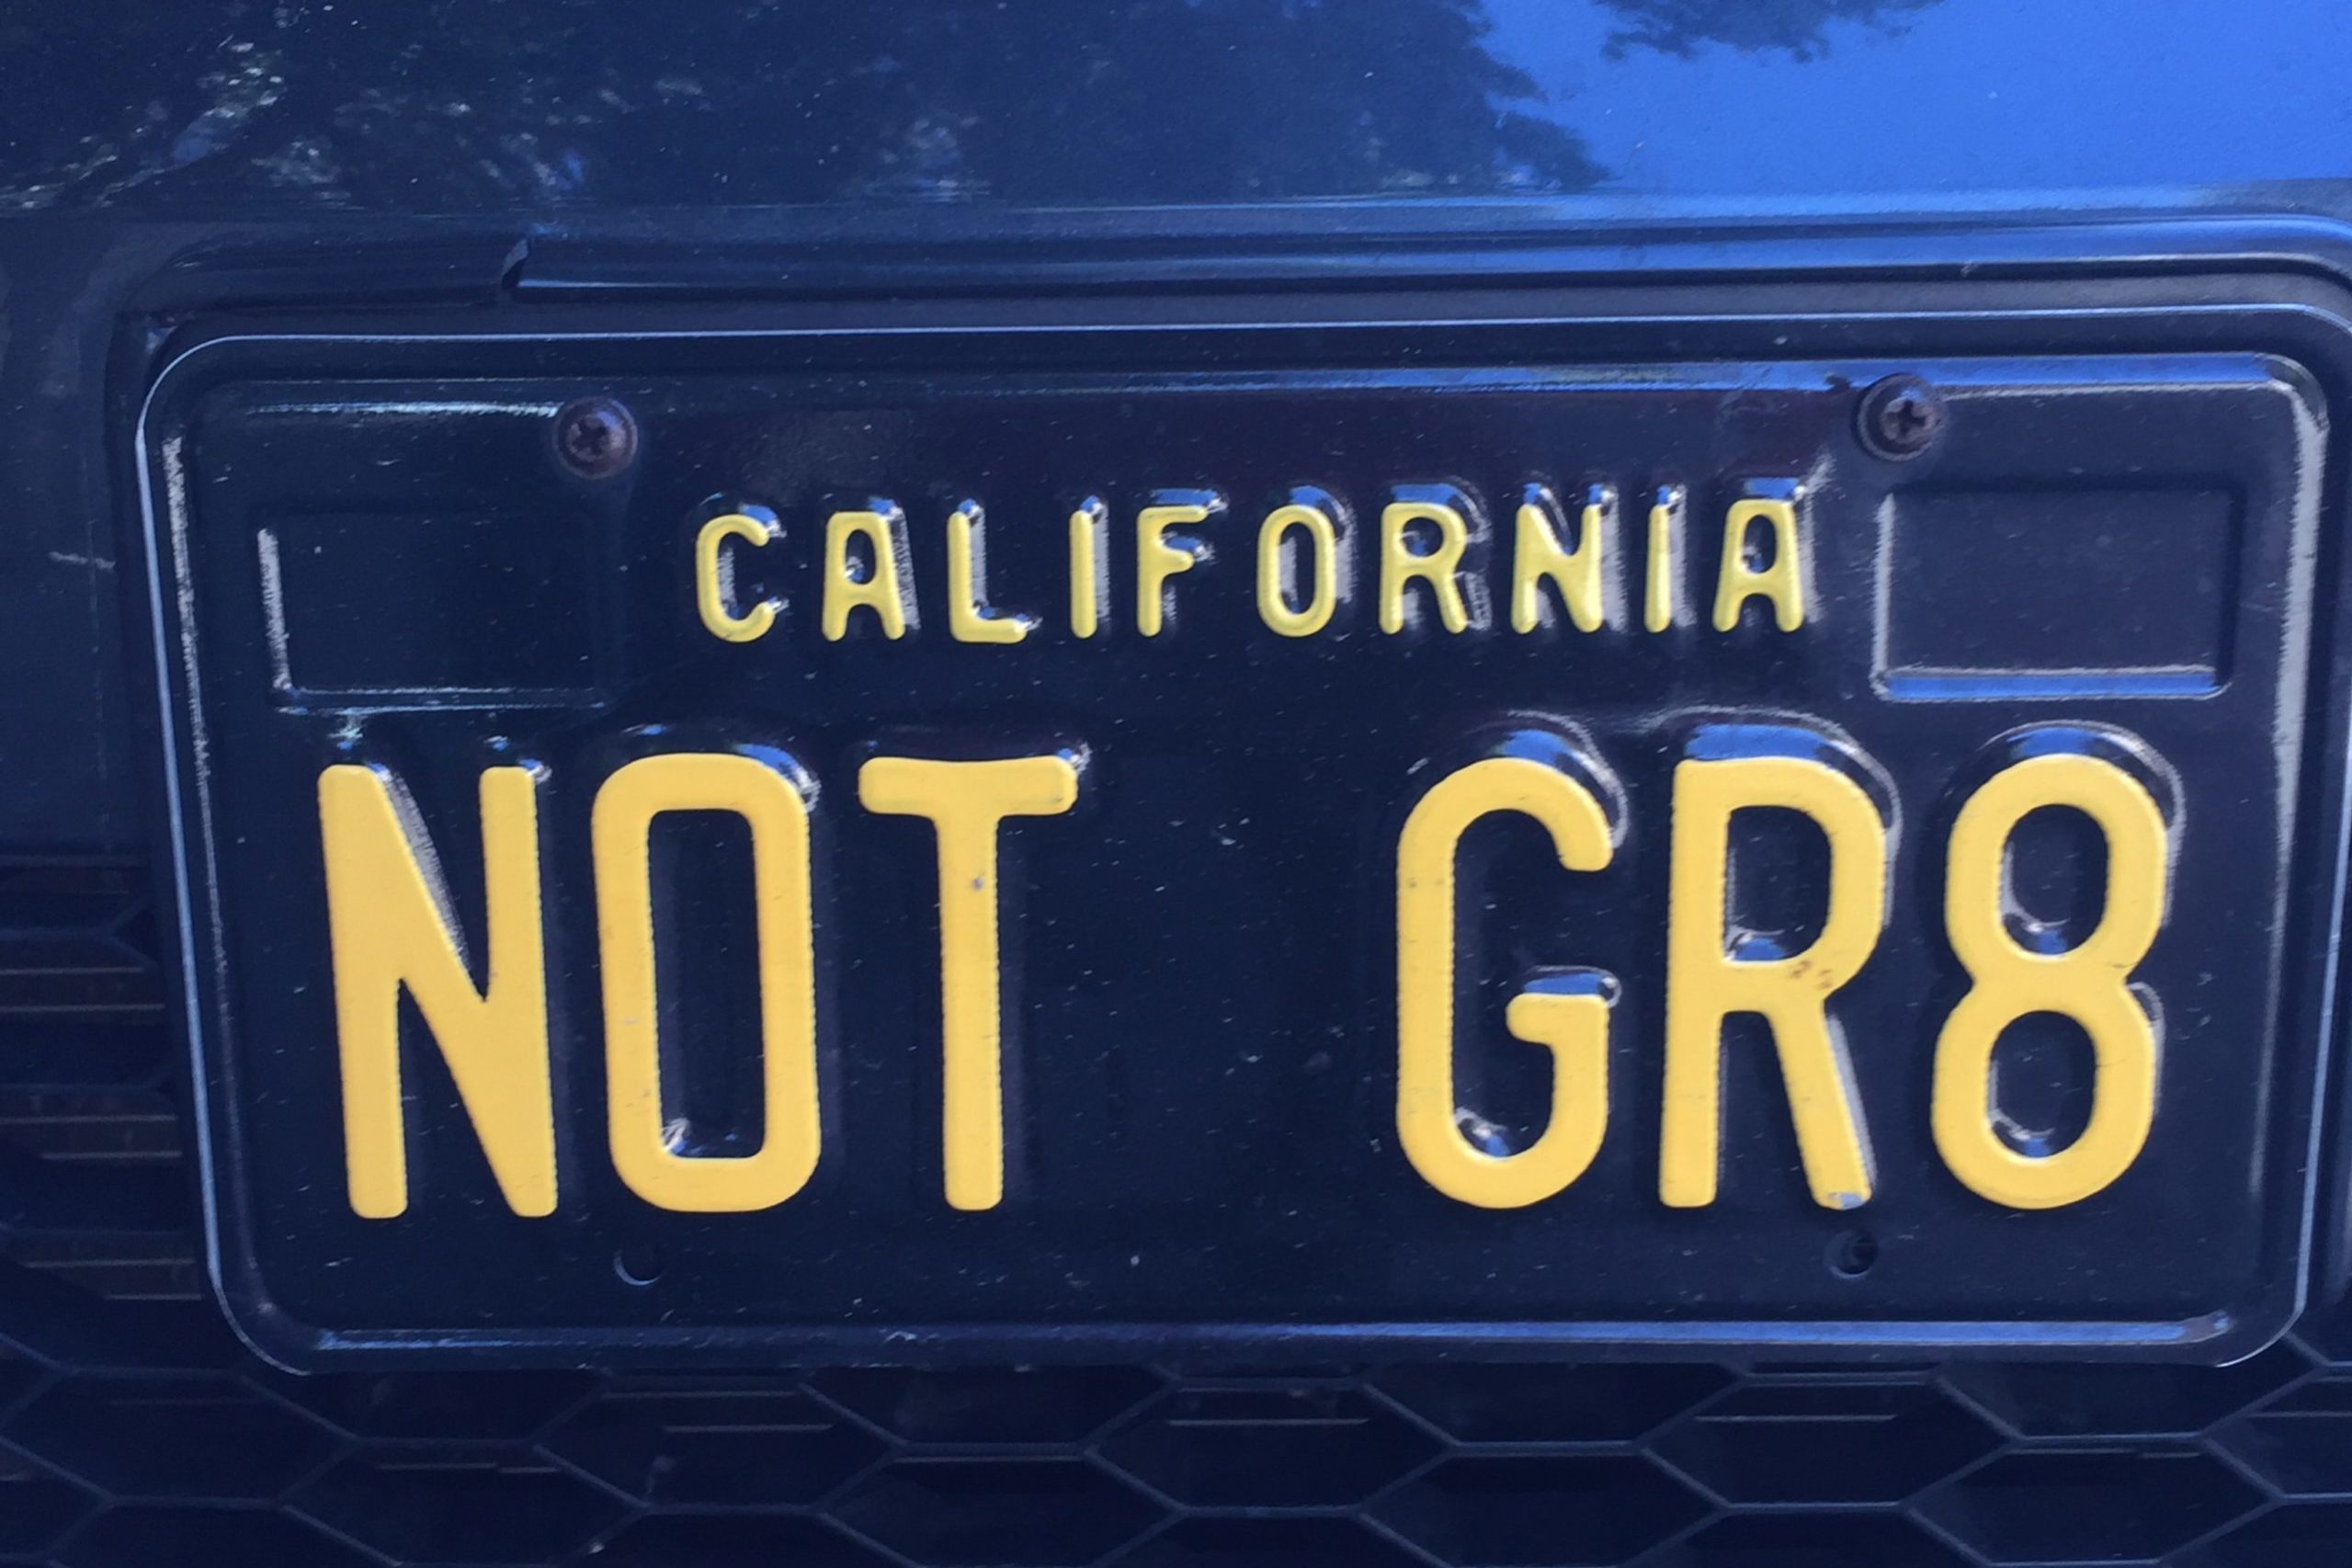 License Plate: NOT GR8